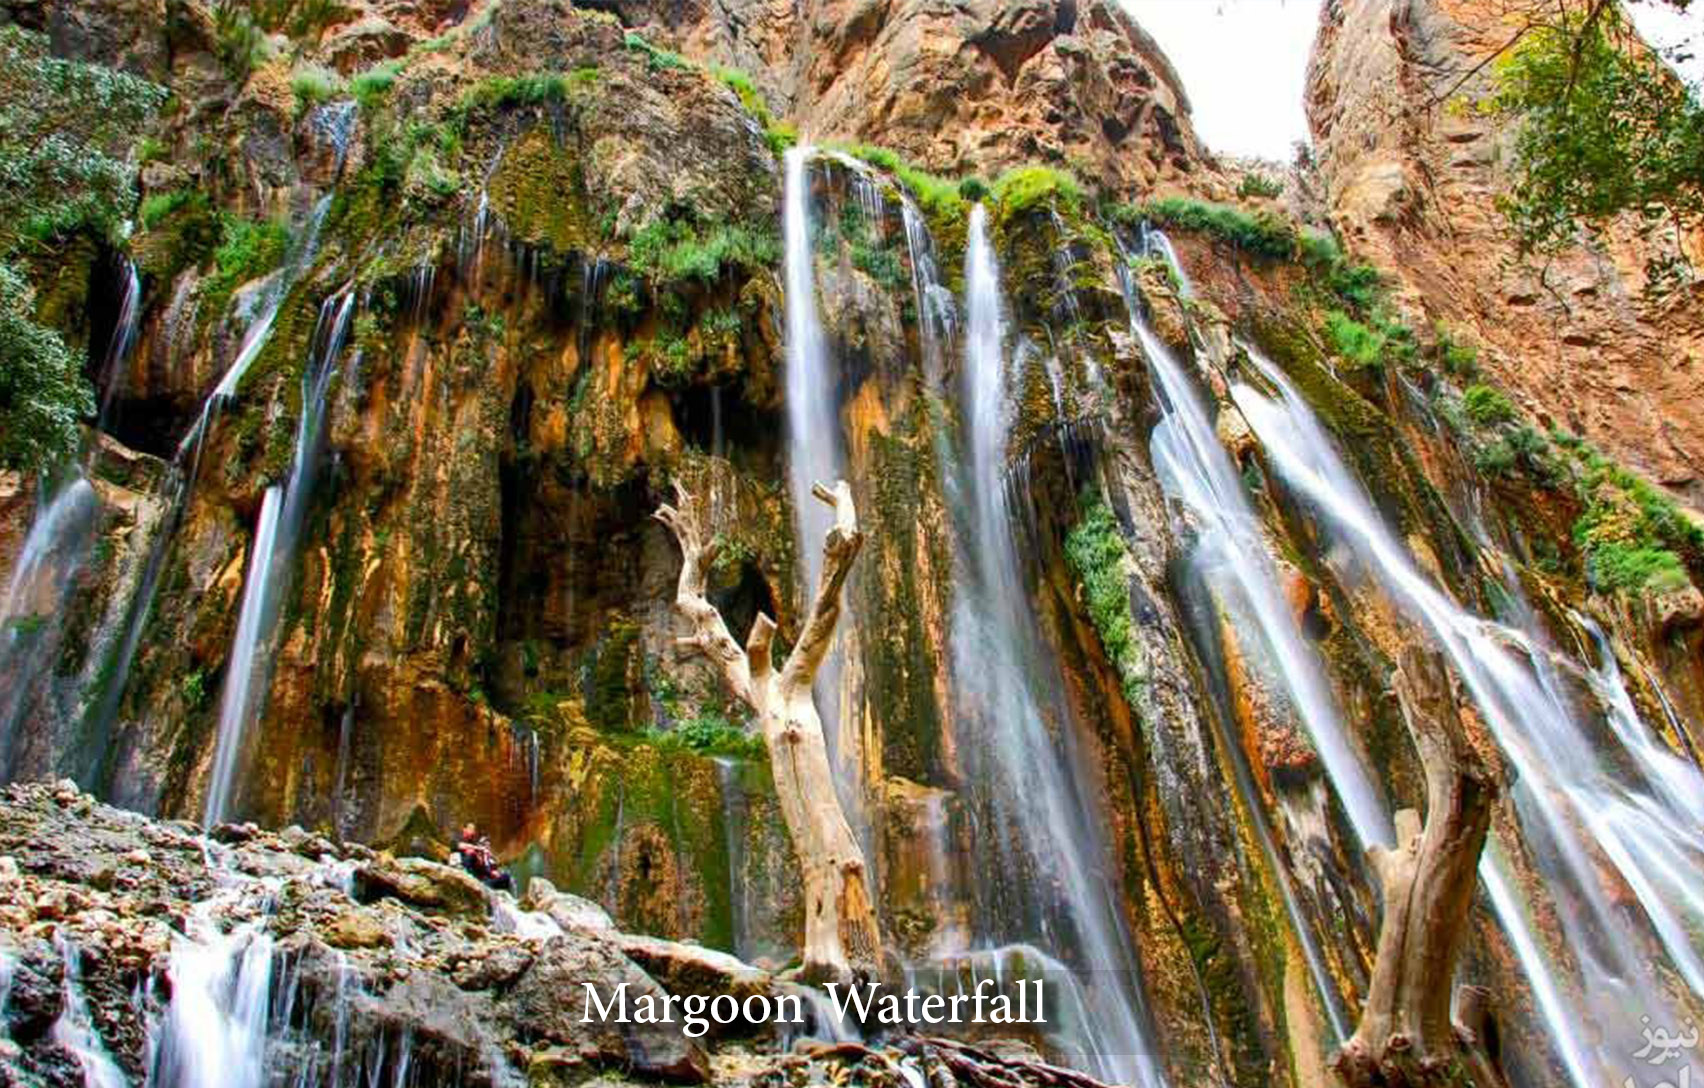 Margoon Waterfall in shiraz